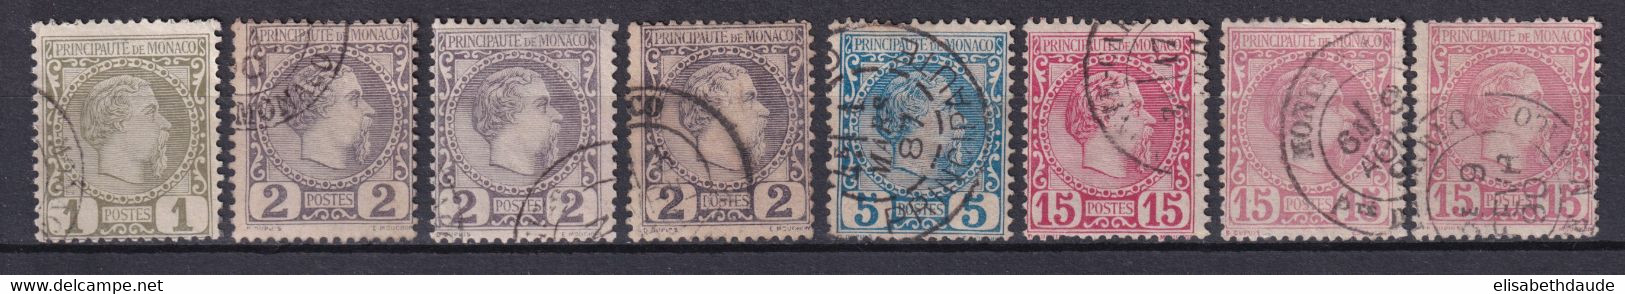 MONACO - 1885 - PRINCE CHARLES III PETIT LOT OBLITERES - TEINTES ! - COTE = 310 EUROS - Used Stamps